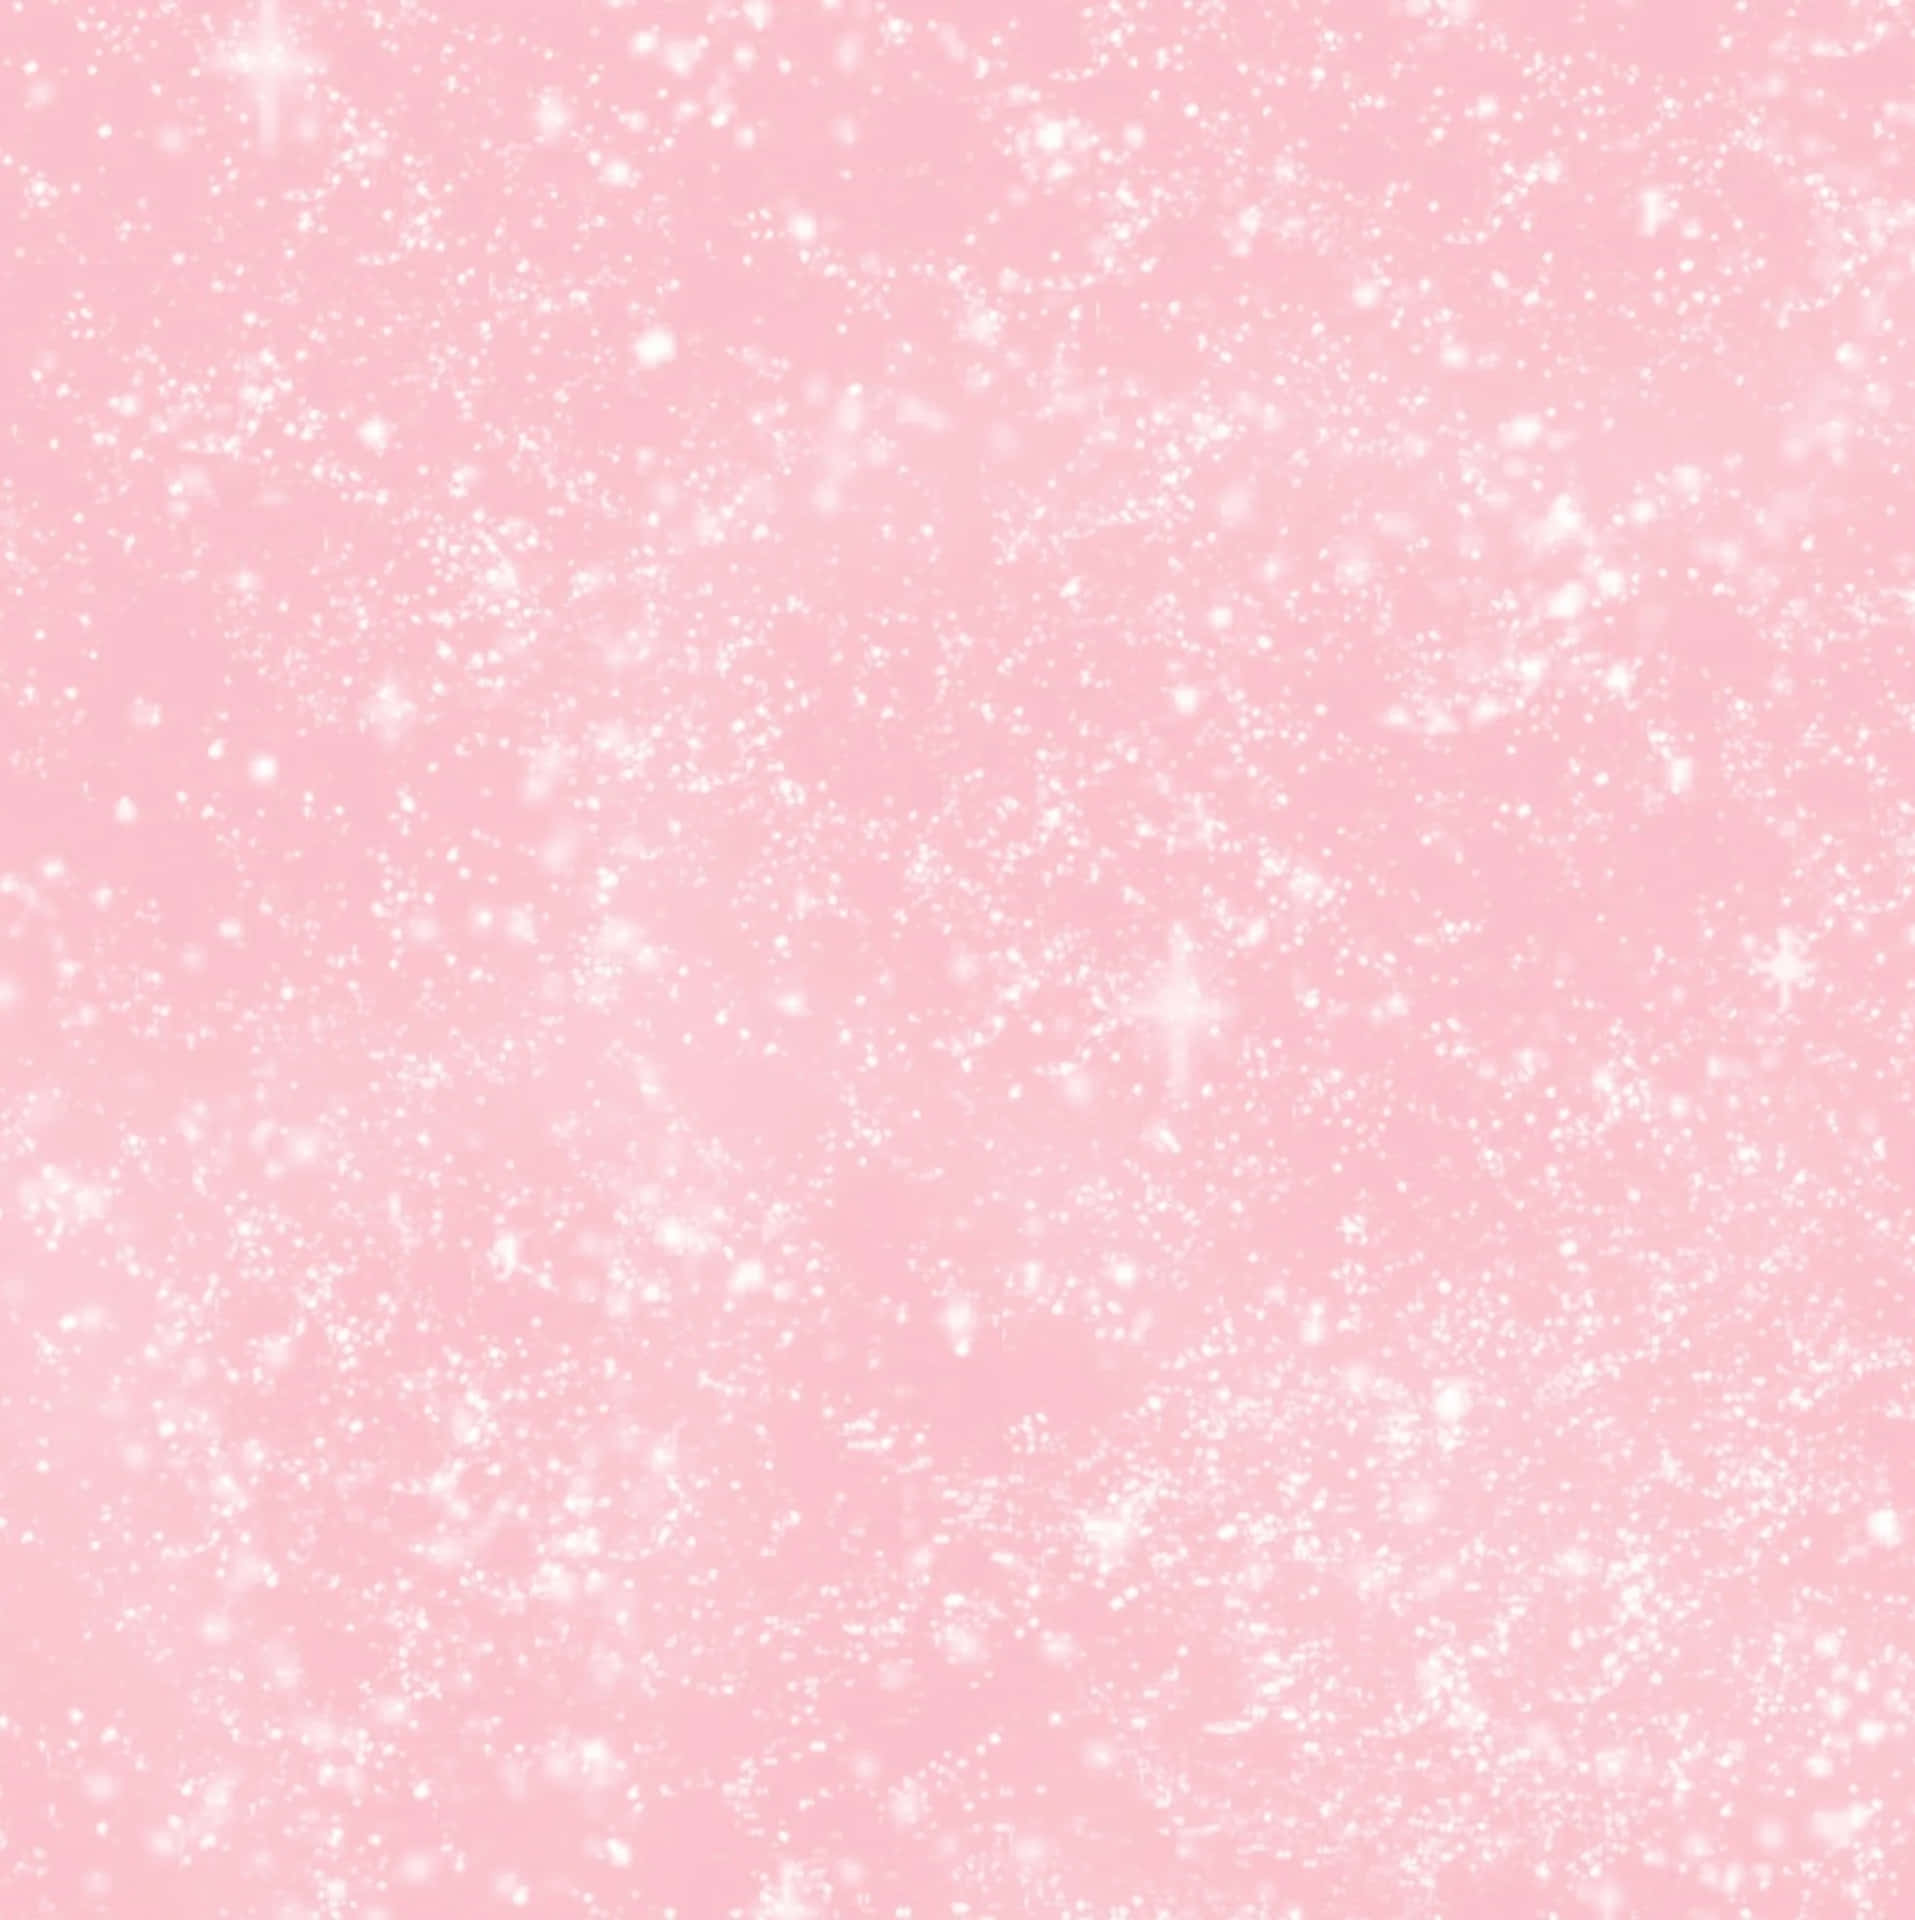 "A Beautiful Pink Blur."